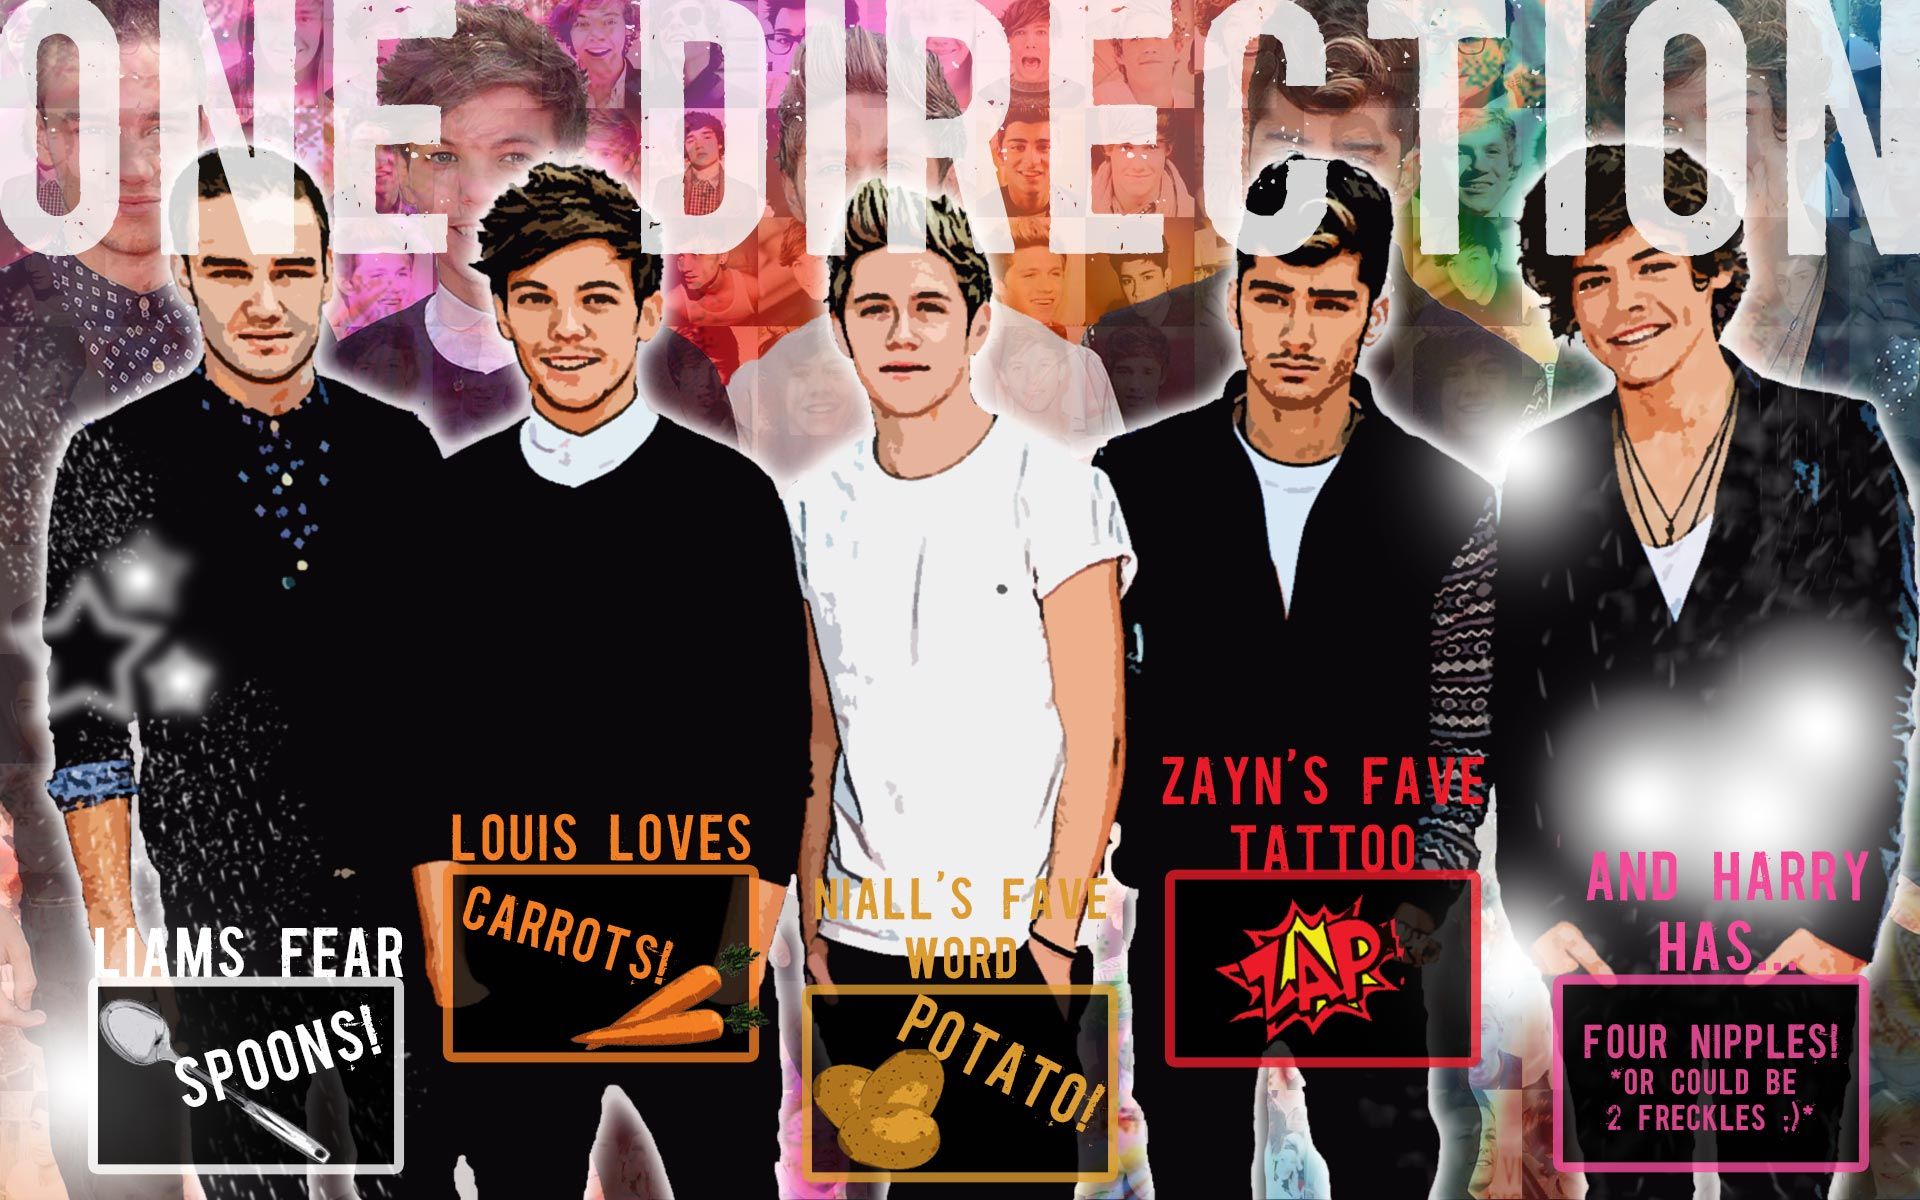 One Direction Desktop Wallpaper